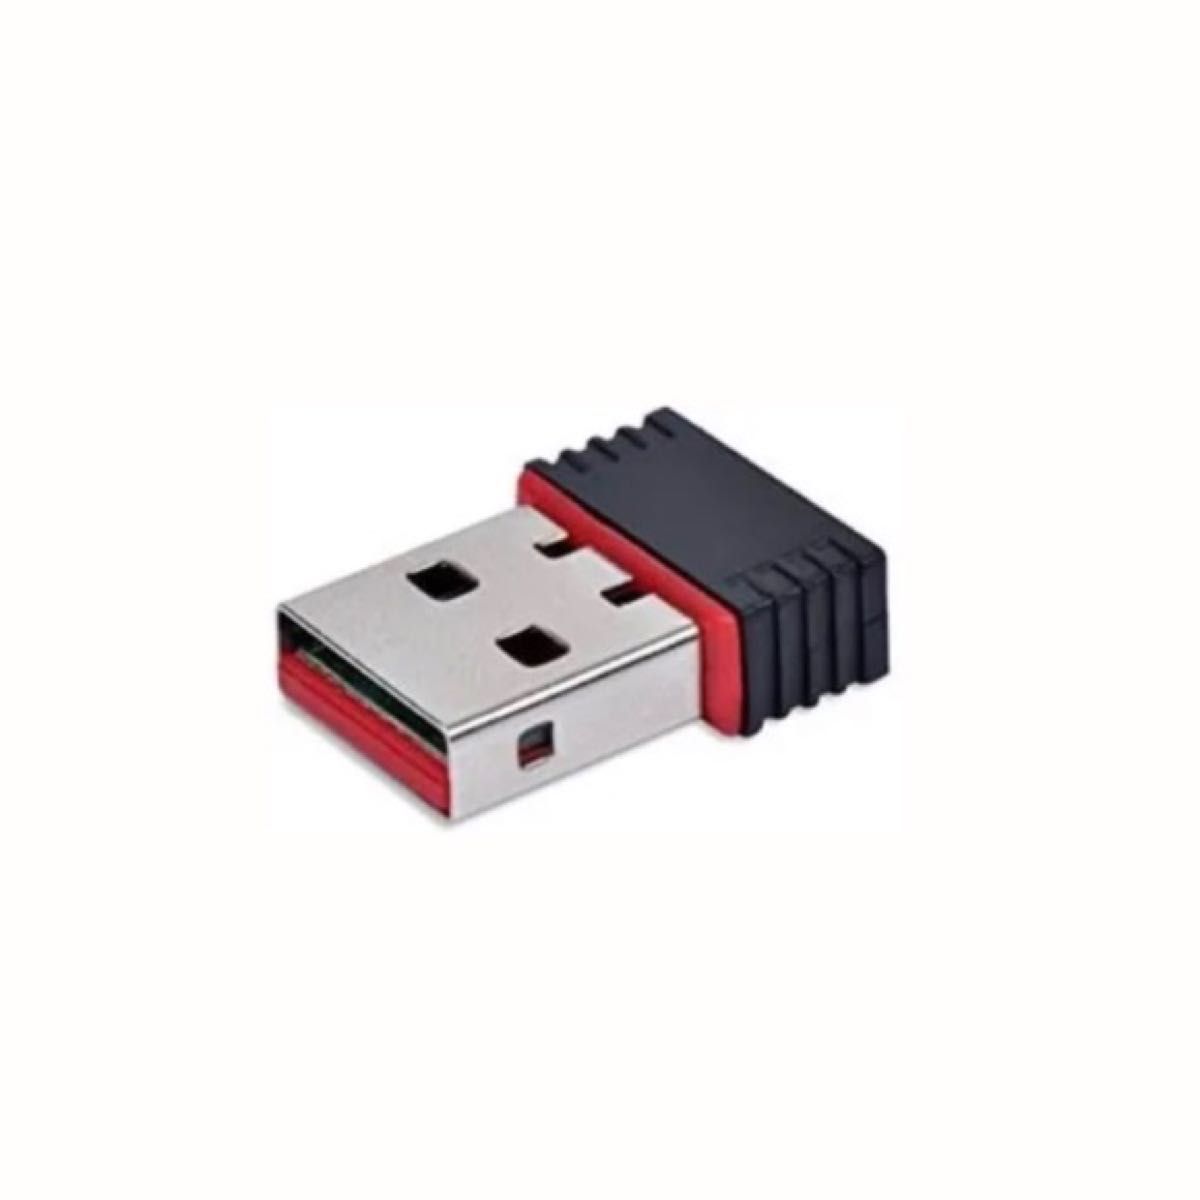 【３個】超小型 USBWiFi子機 USB 無線LAN wifi 受信機 無線LAN子機 IEEE802.11n USBアダプタ